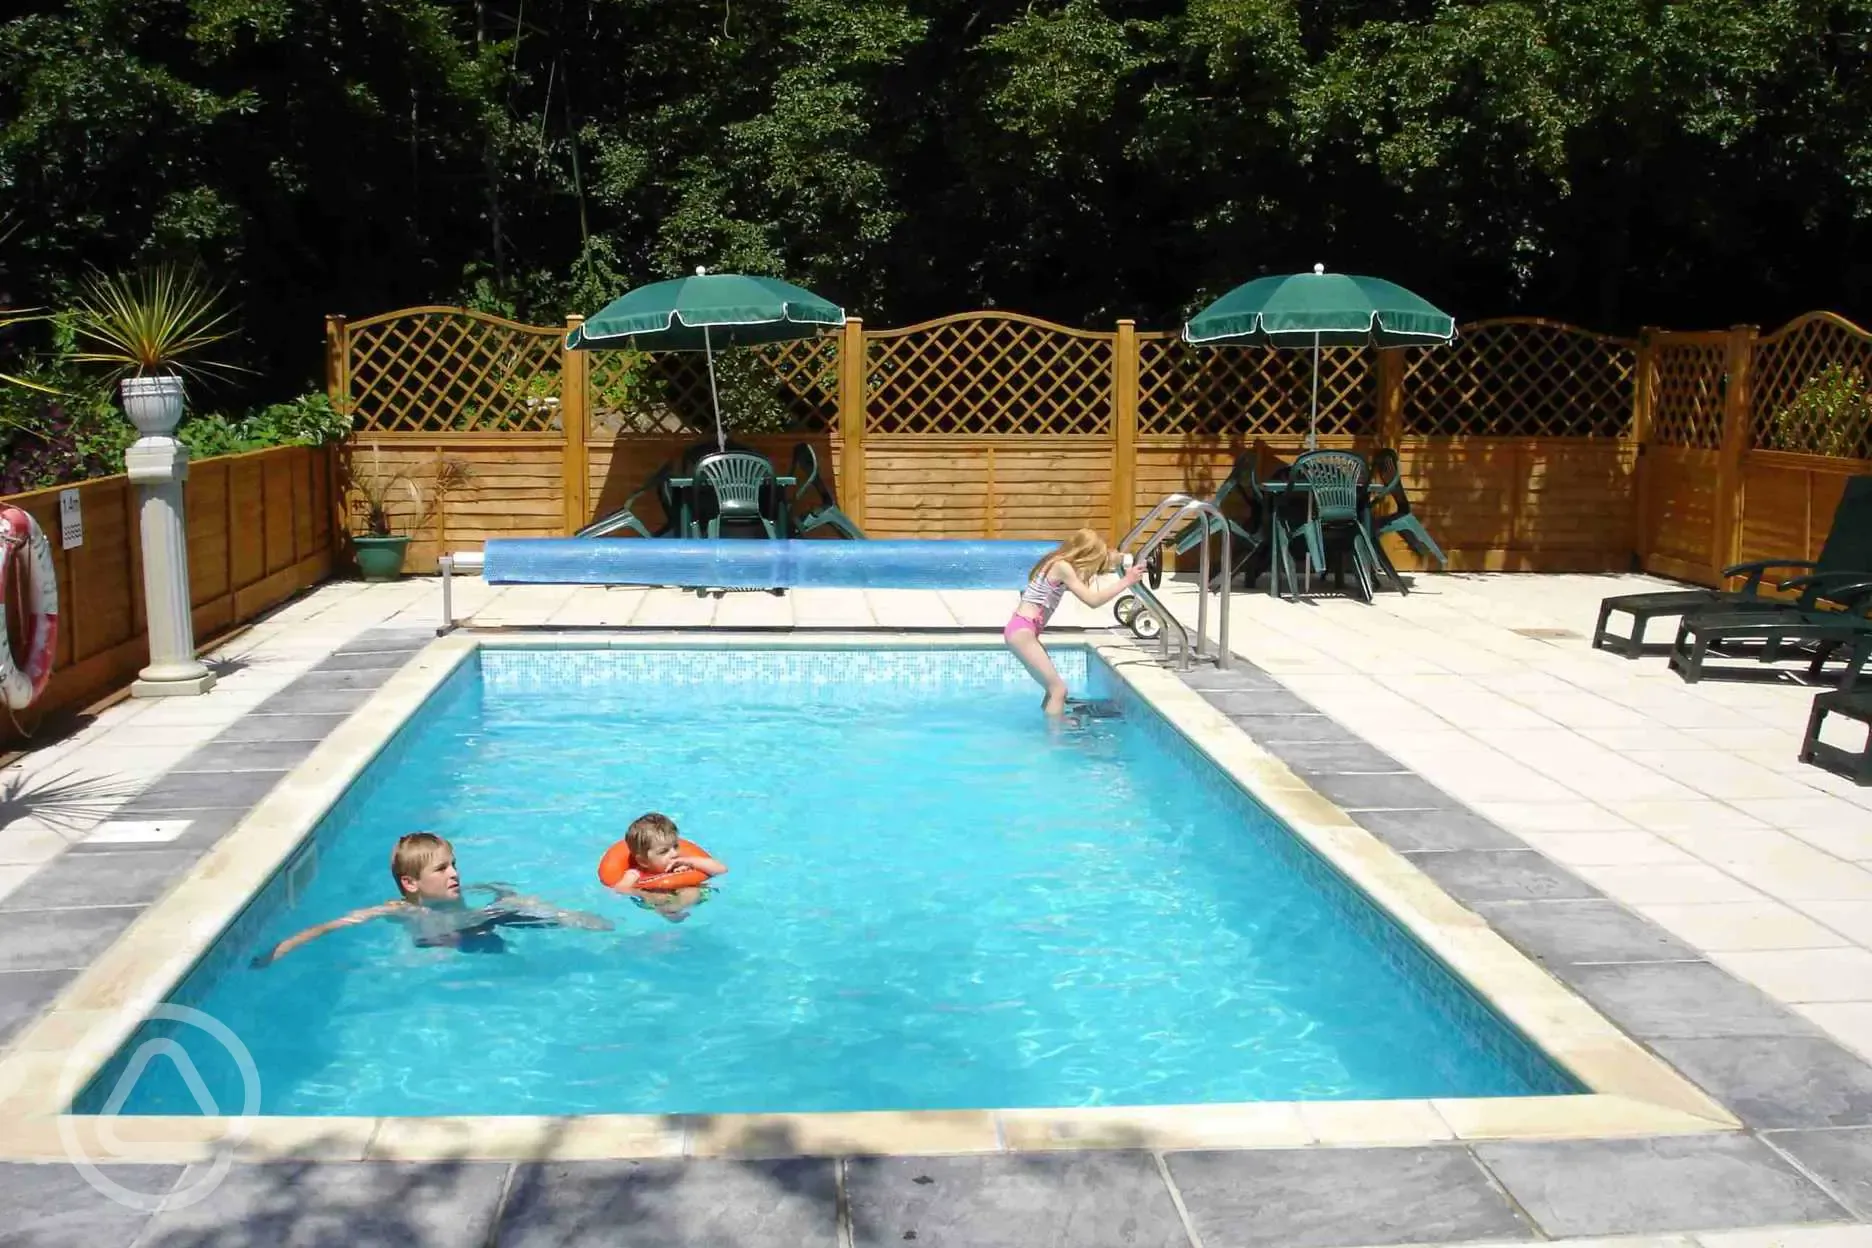 Heated outdoor pool